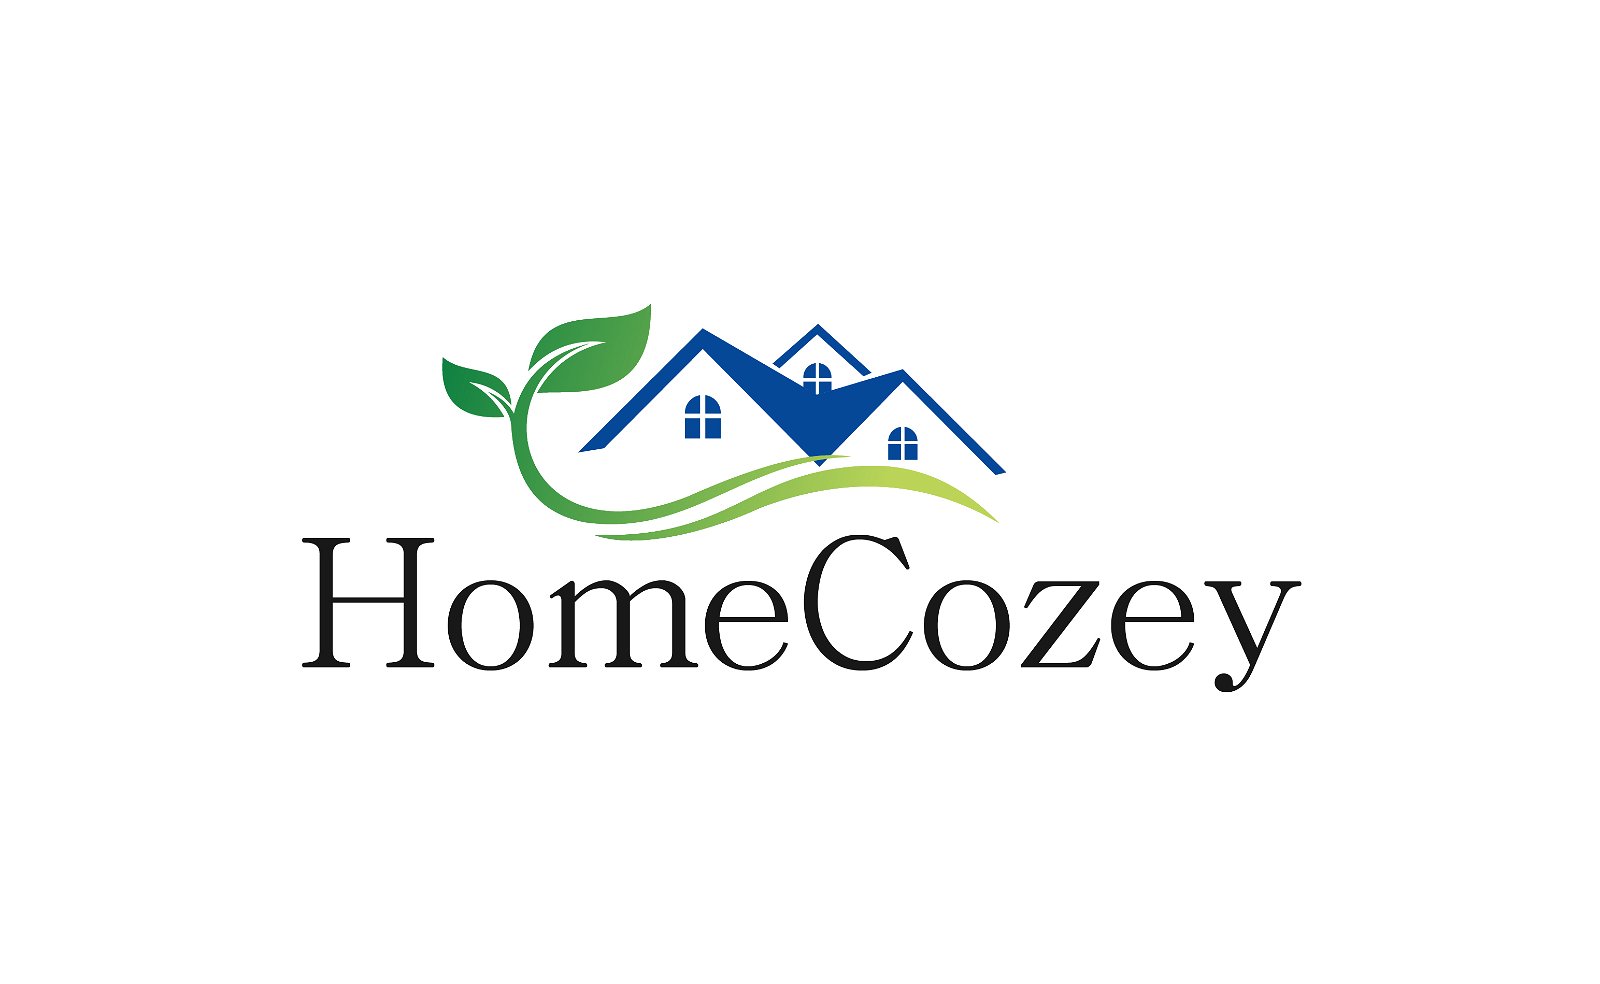 HomeCozey.com - Creative brandable domain for sale